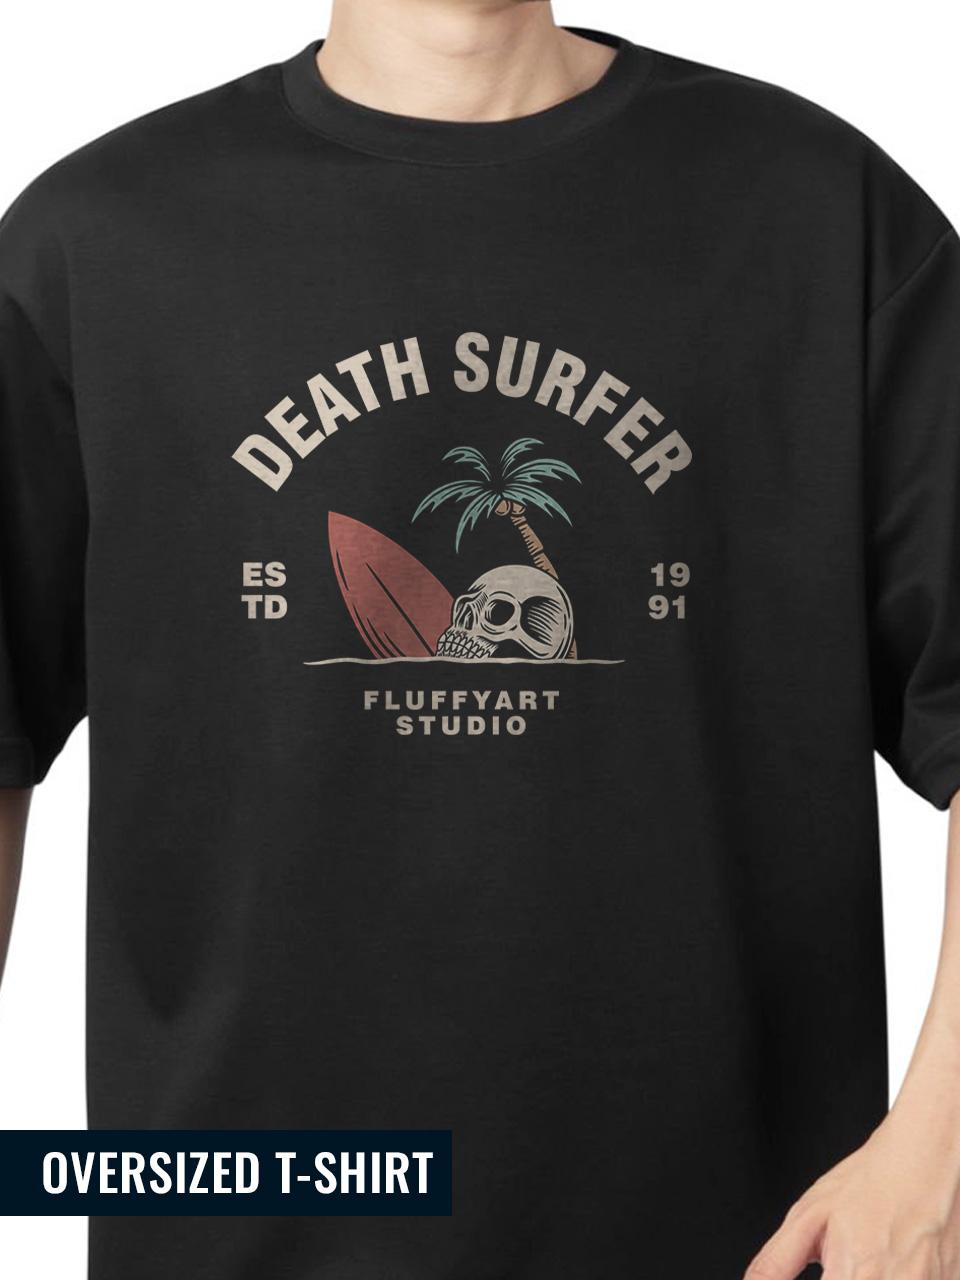 Death Surfer Resurgence Oversized T-Shirt